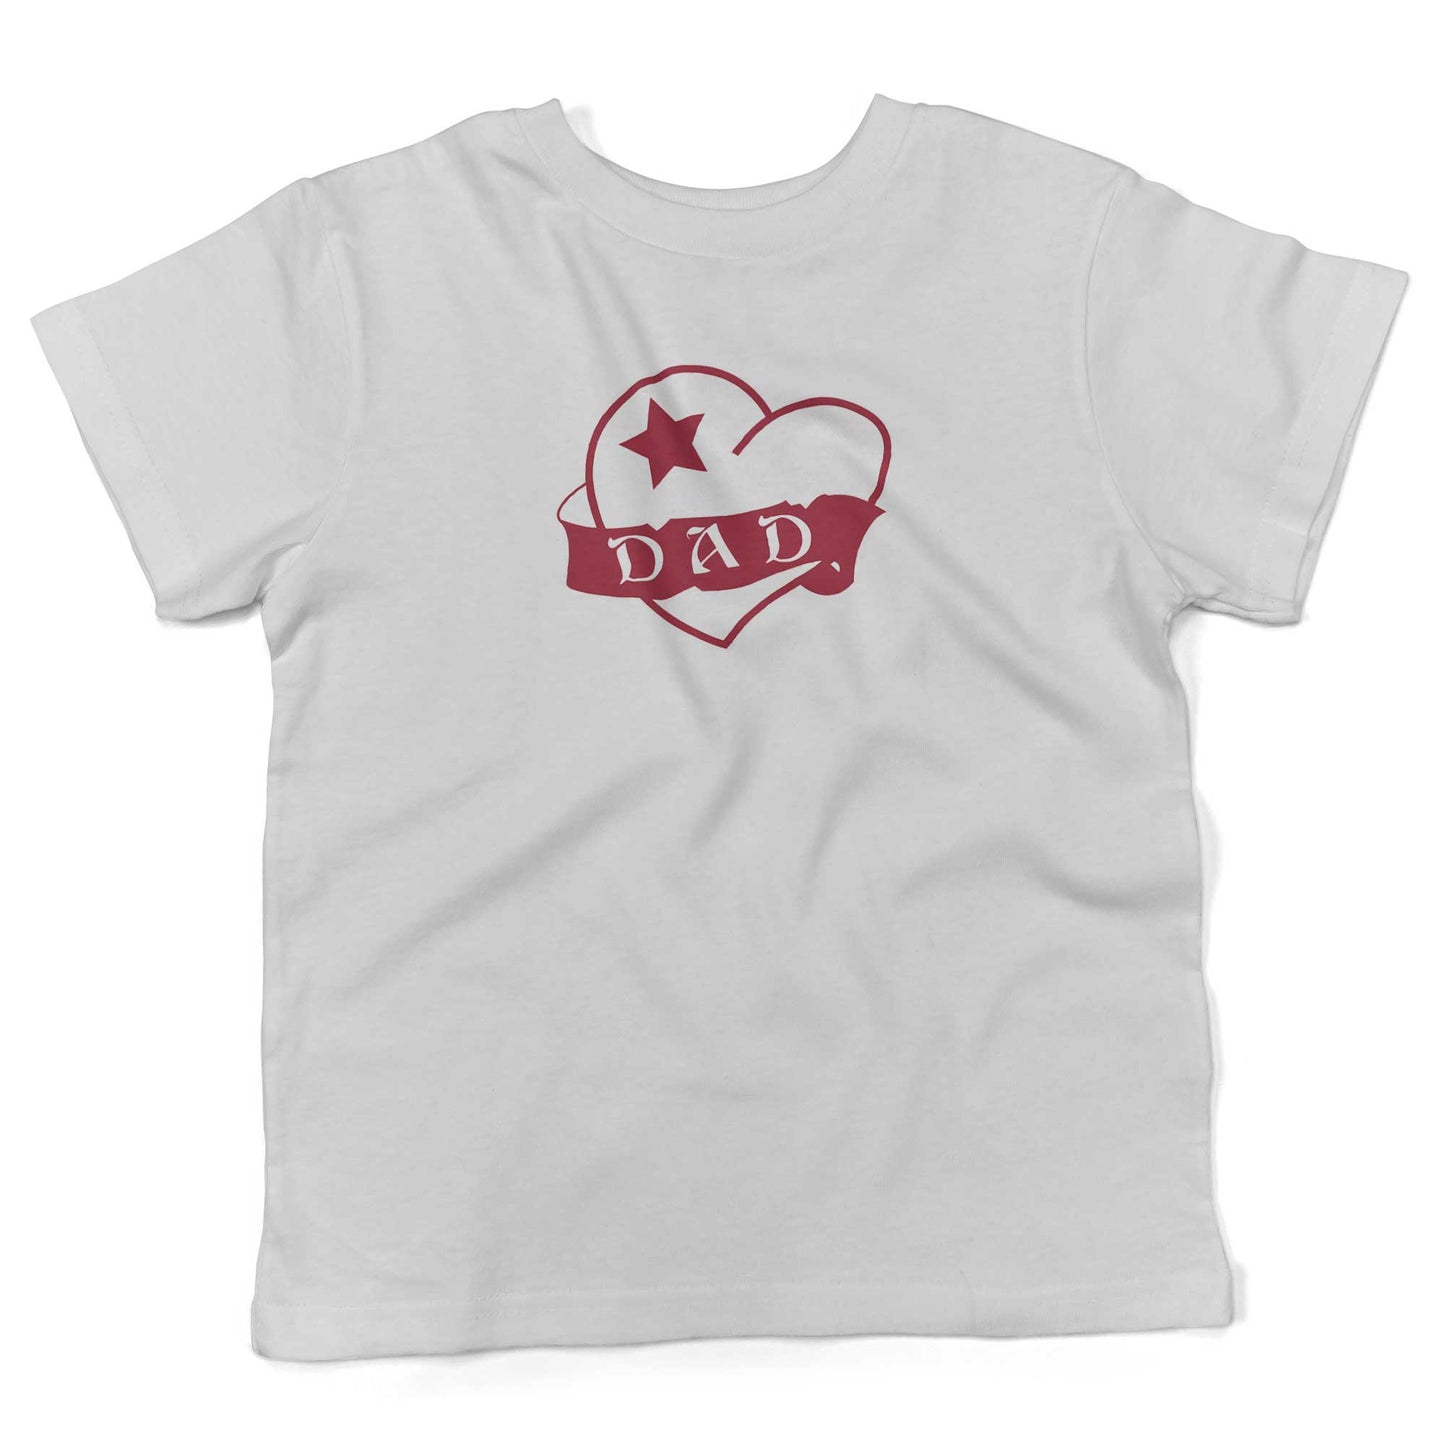 Dad Tattoo Heart Toddler Shirt-White-2T